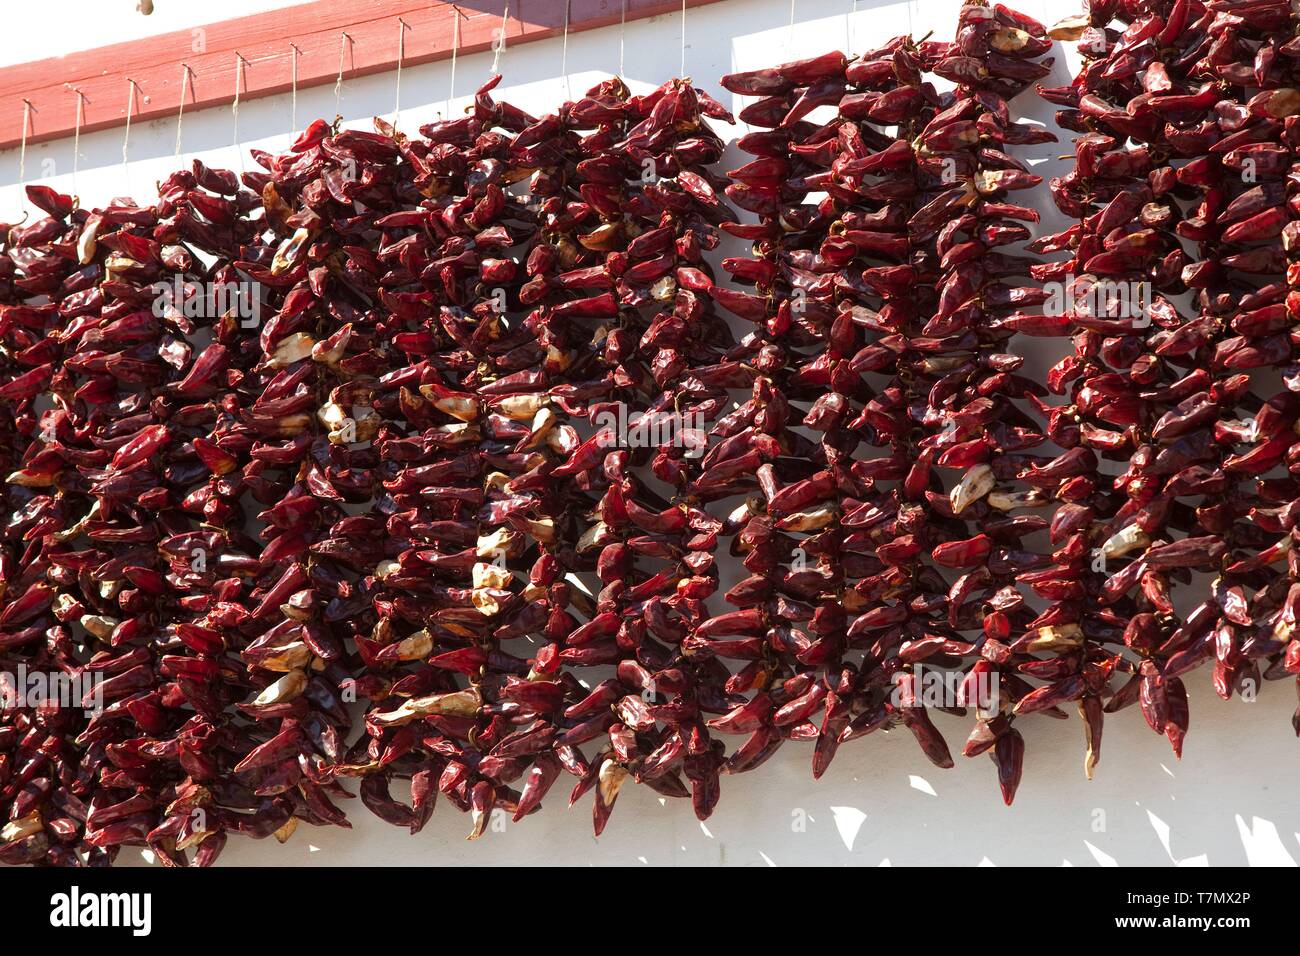 France, Pyrenees Atlantique, Bask Country, Espelette, Espelette pepper drying on a facade Stock Photo